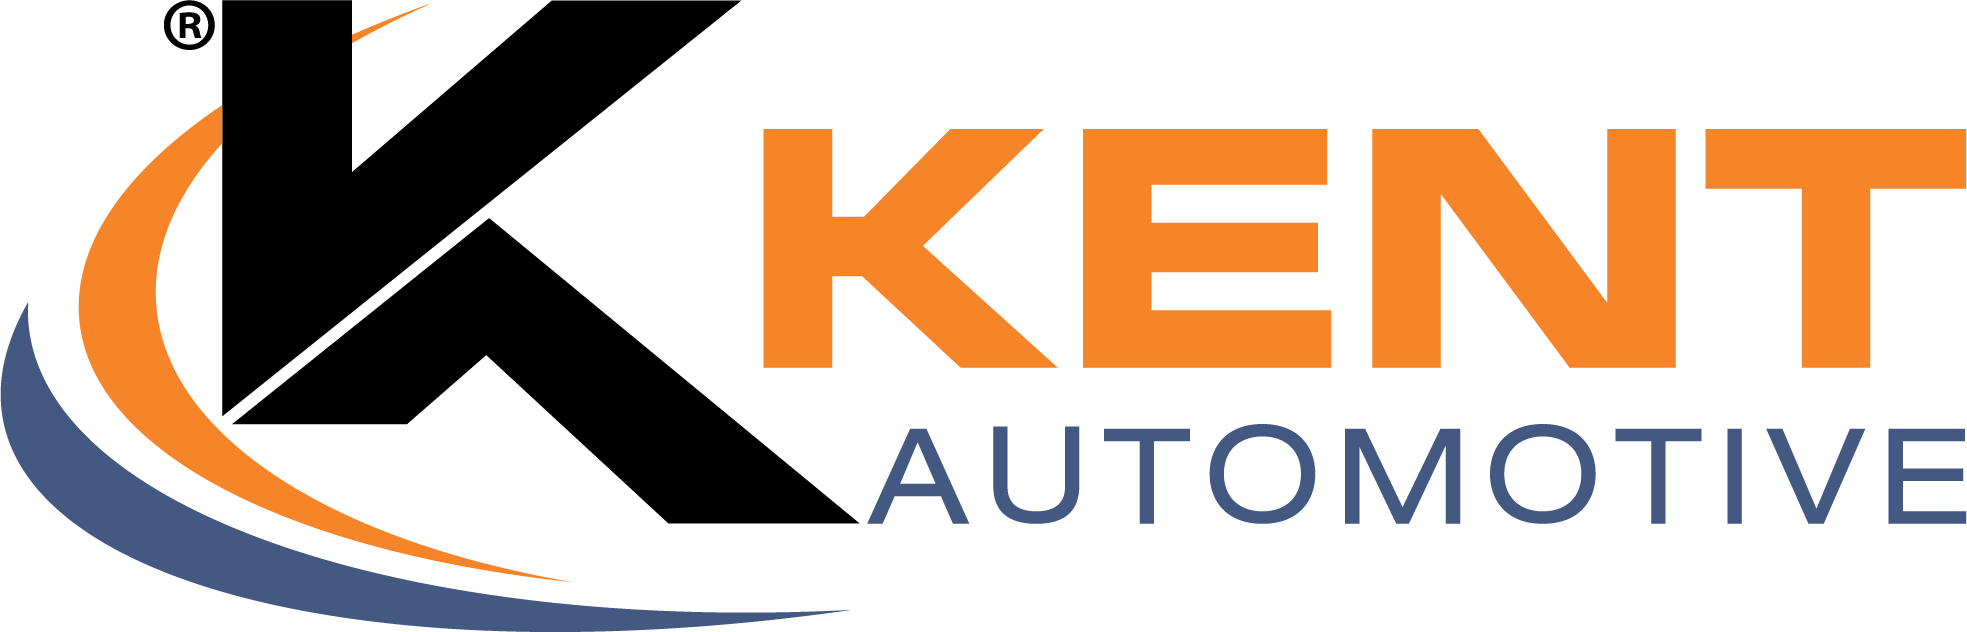 kent-logo-color-cmyk (New)